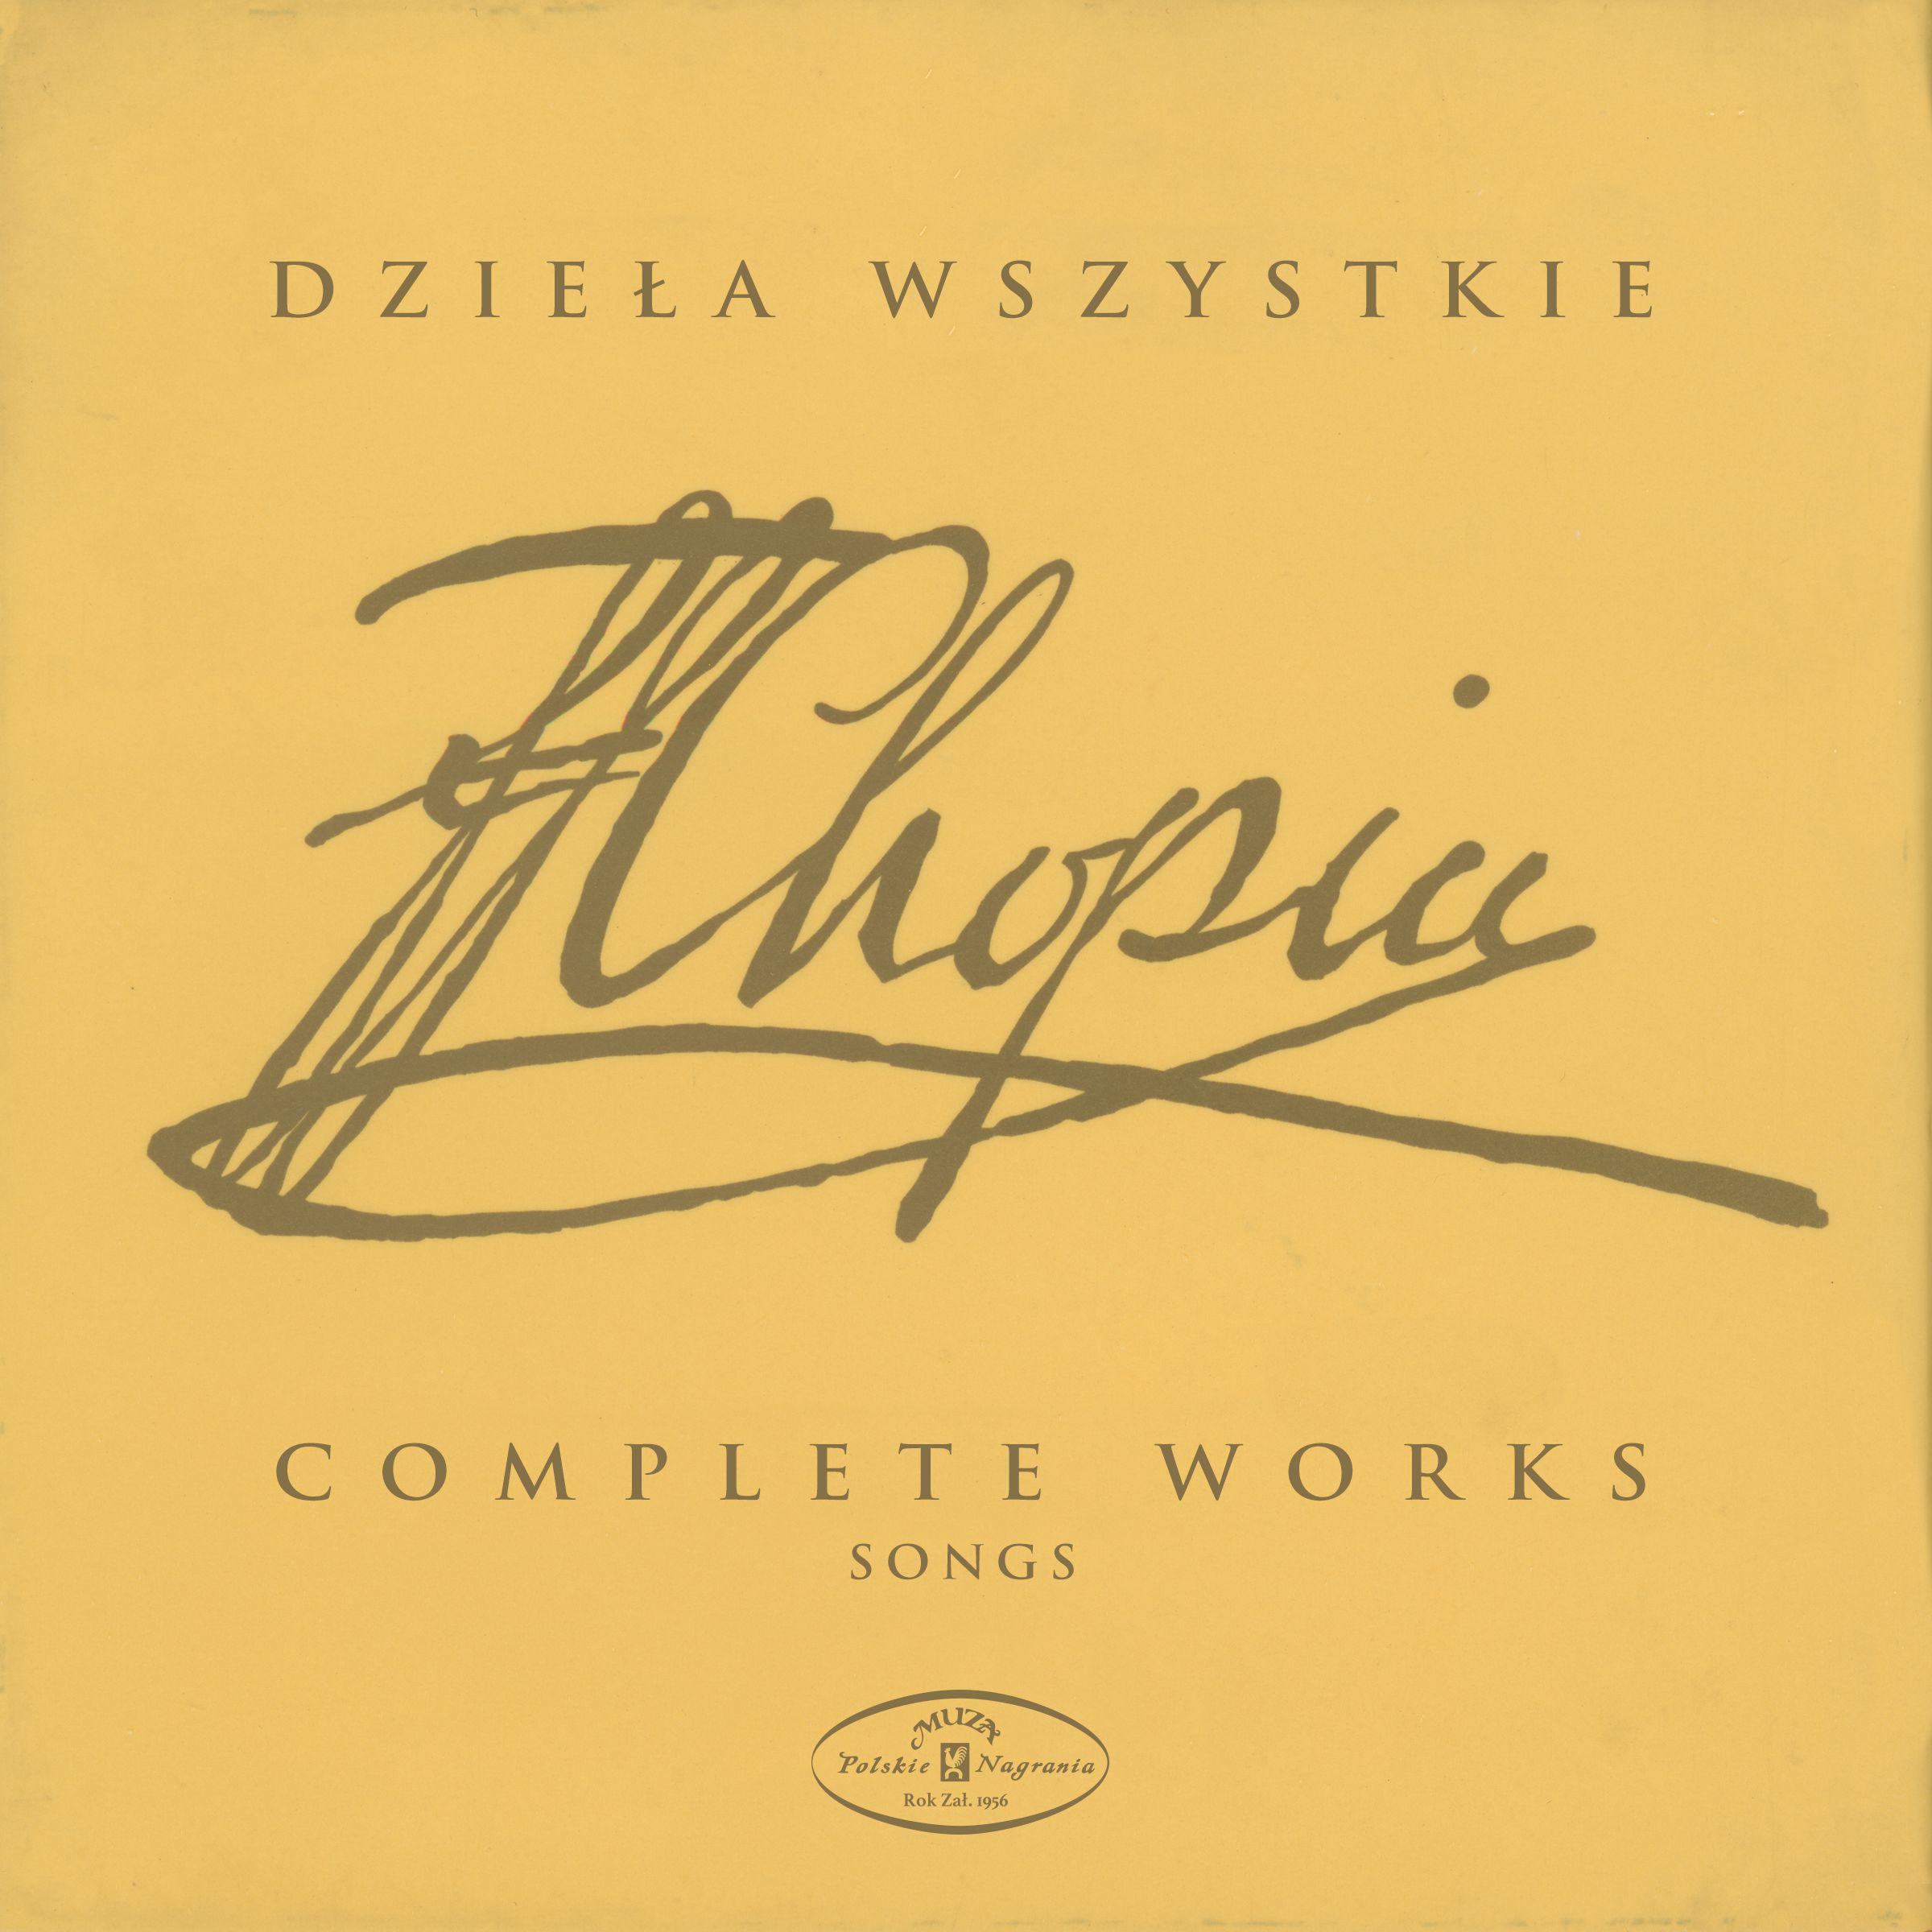 Stefania Woytowicz - 17 Polish Songs, Op. 74:No. 8, Sliczny chlopiec